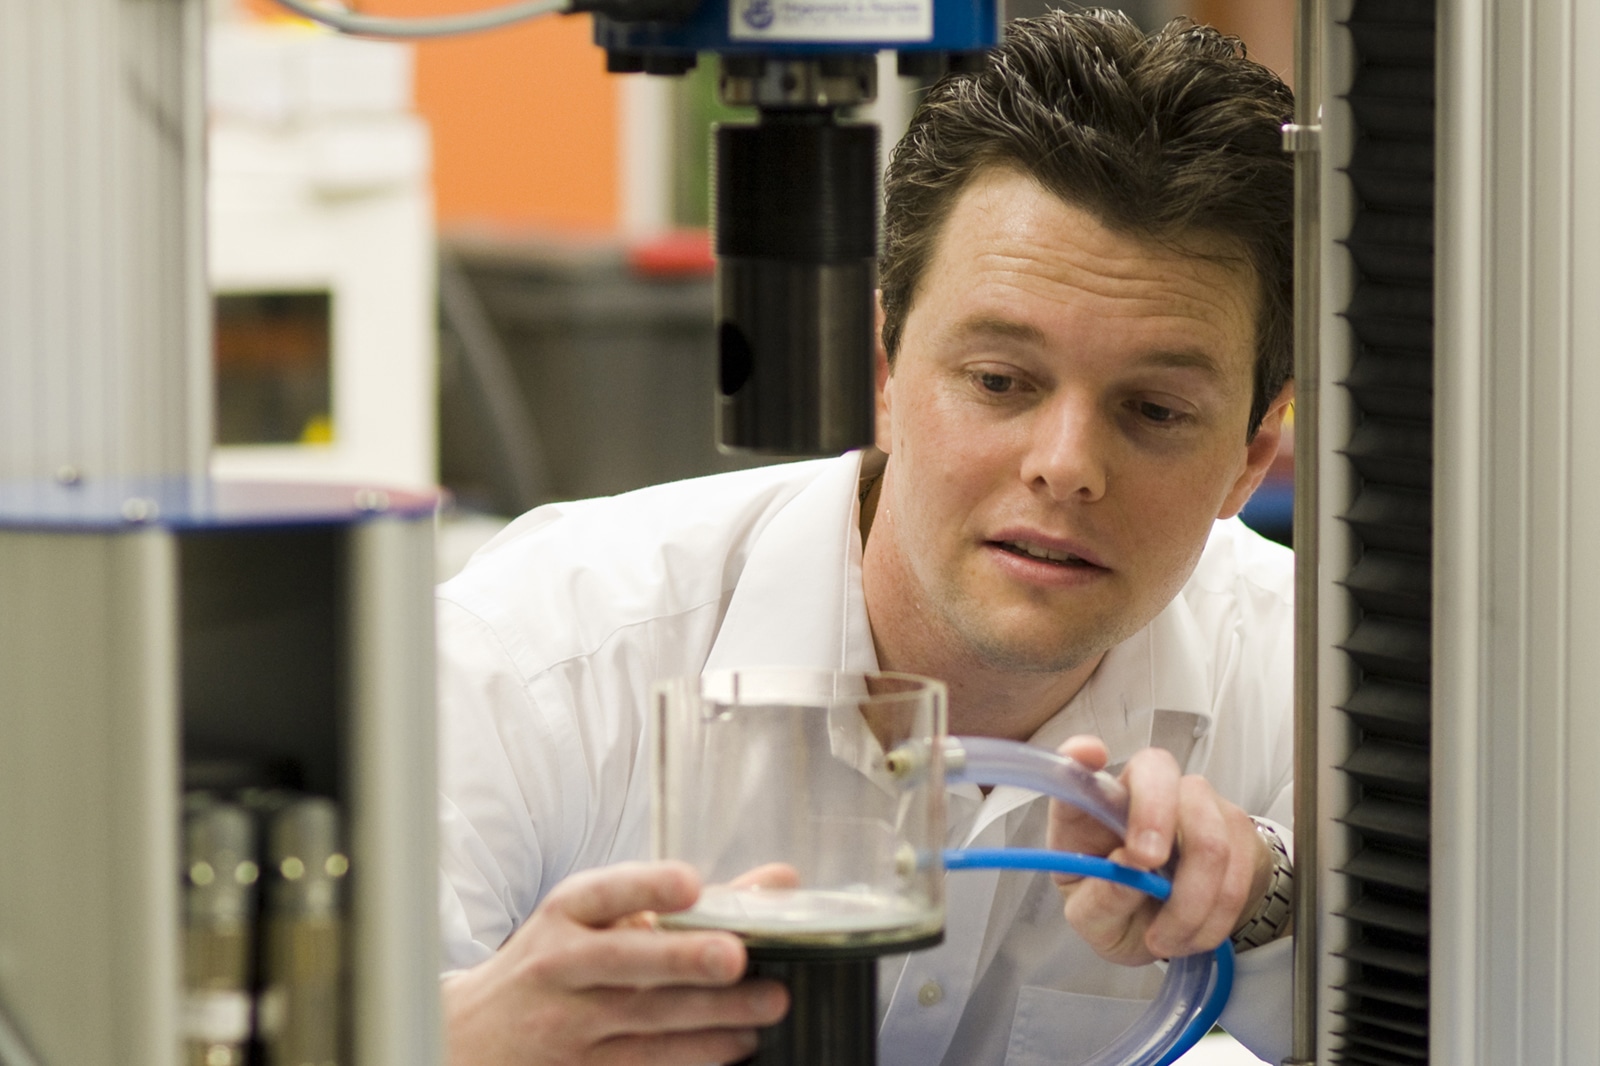 A scientist at the Fernhofer Institute in Germany examines hydrogen against various substances. Photo: Fernhauper Institute